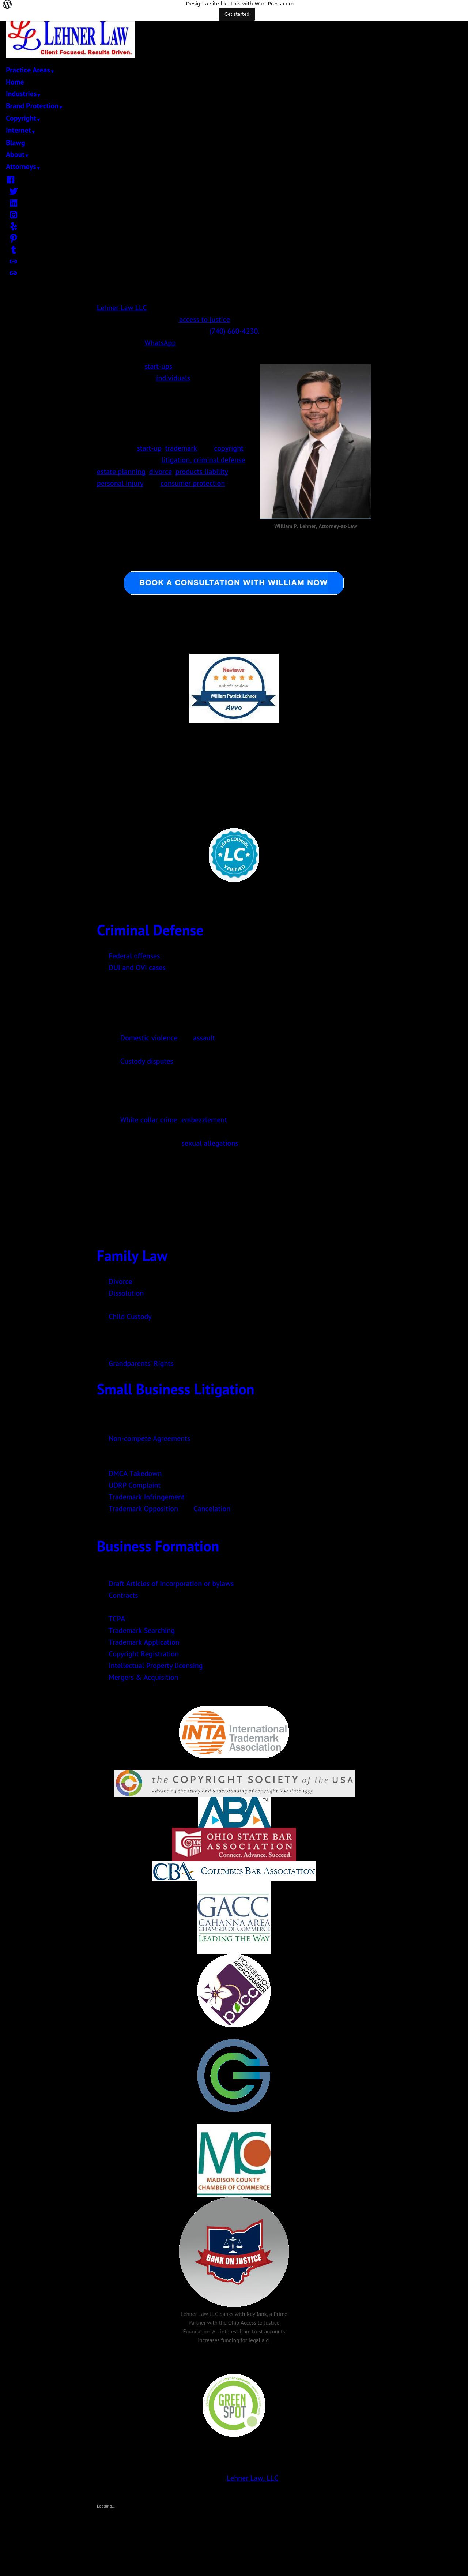 Lehner Law LLC - GROVE CITY OH Lawyers